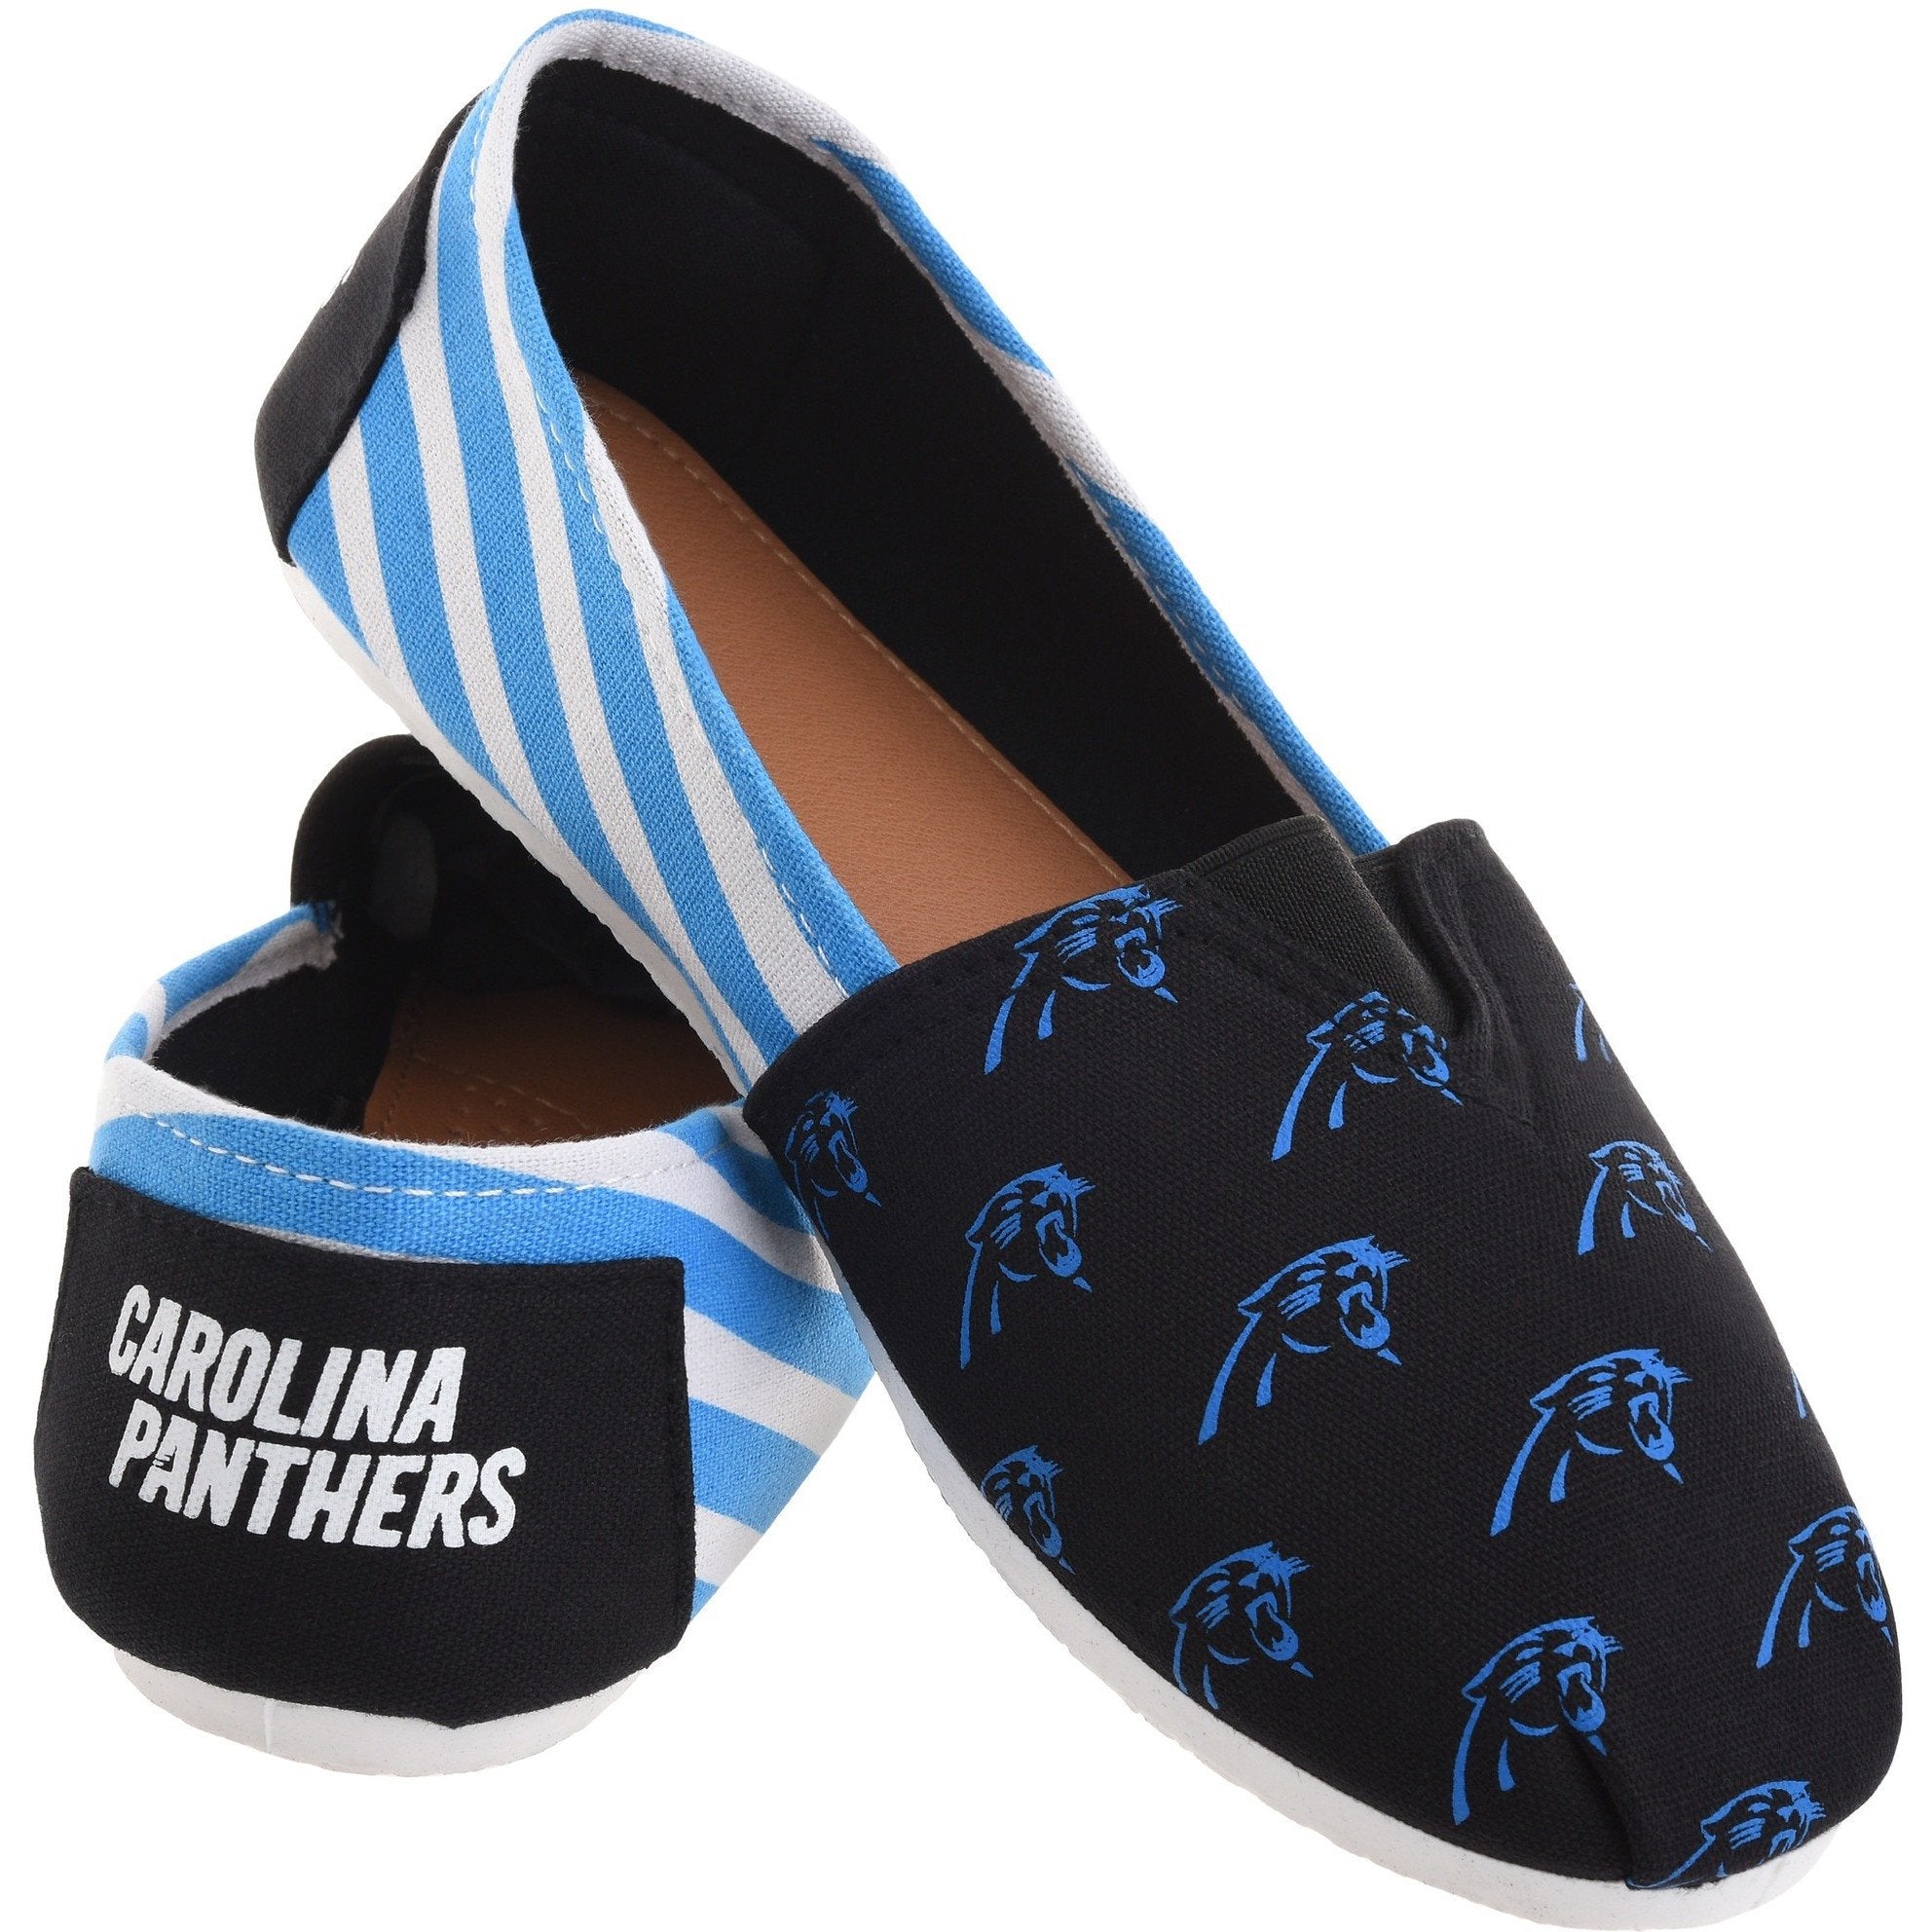 carolina panthers women's shoes